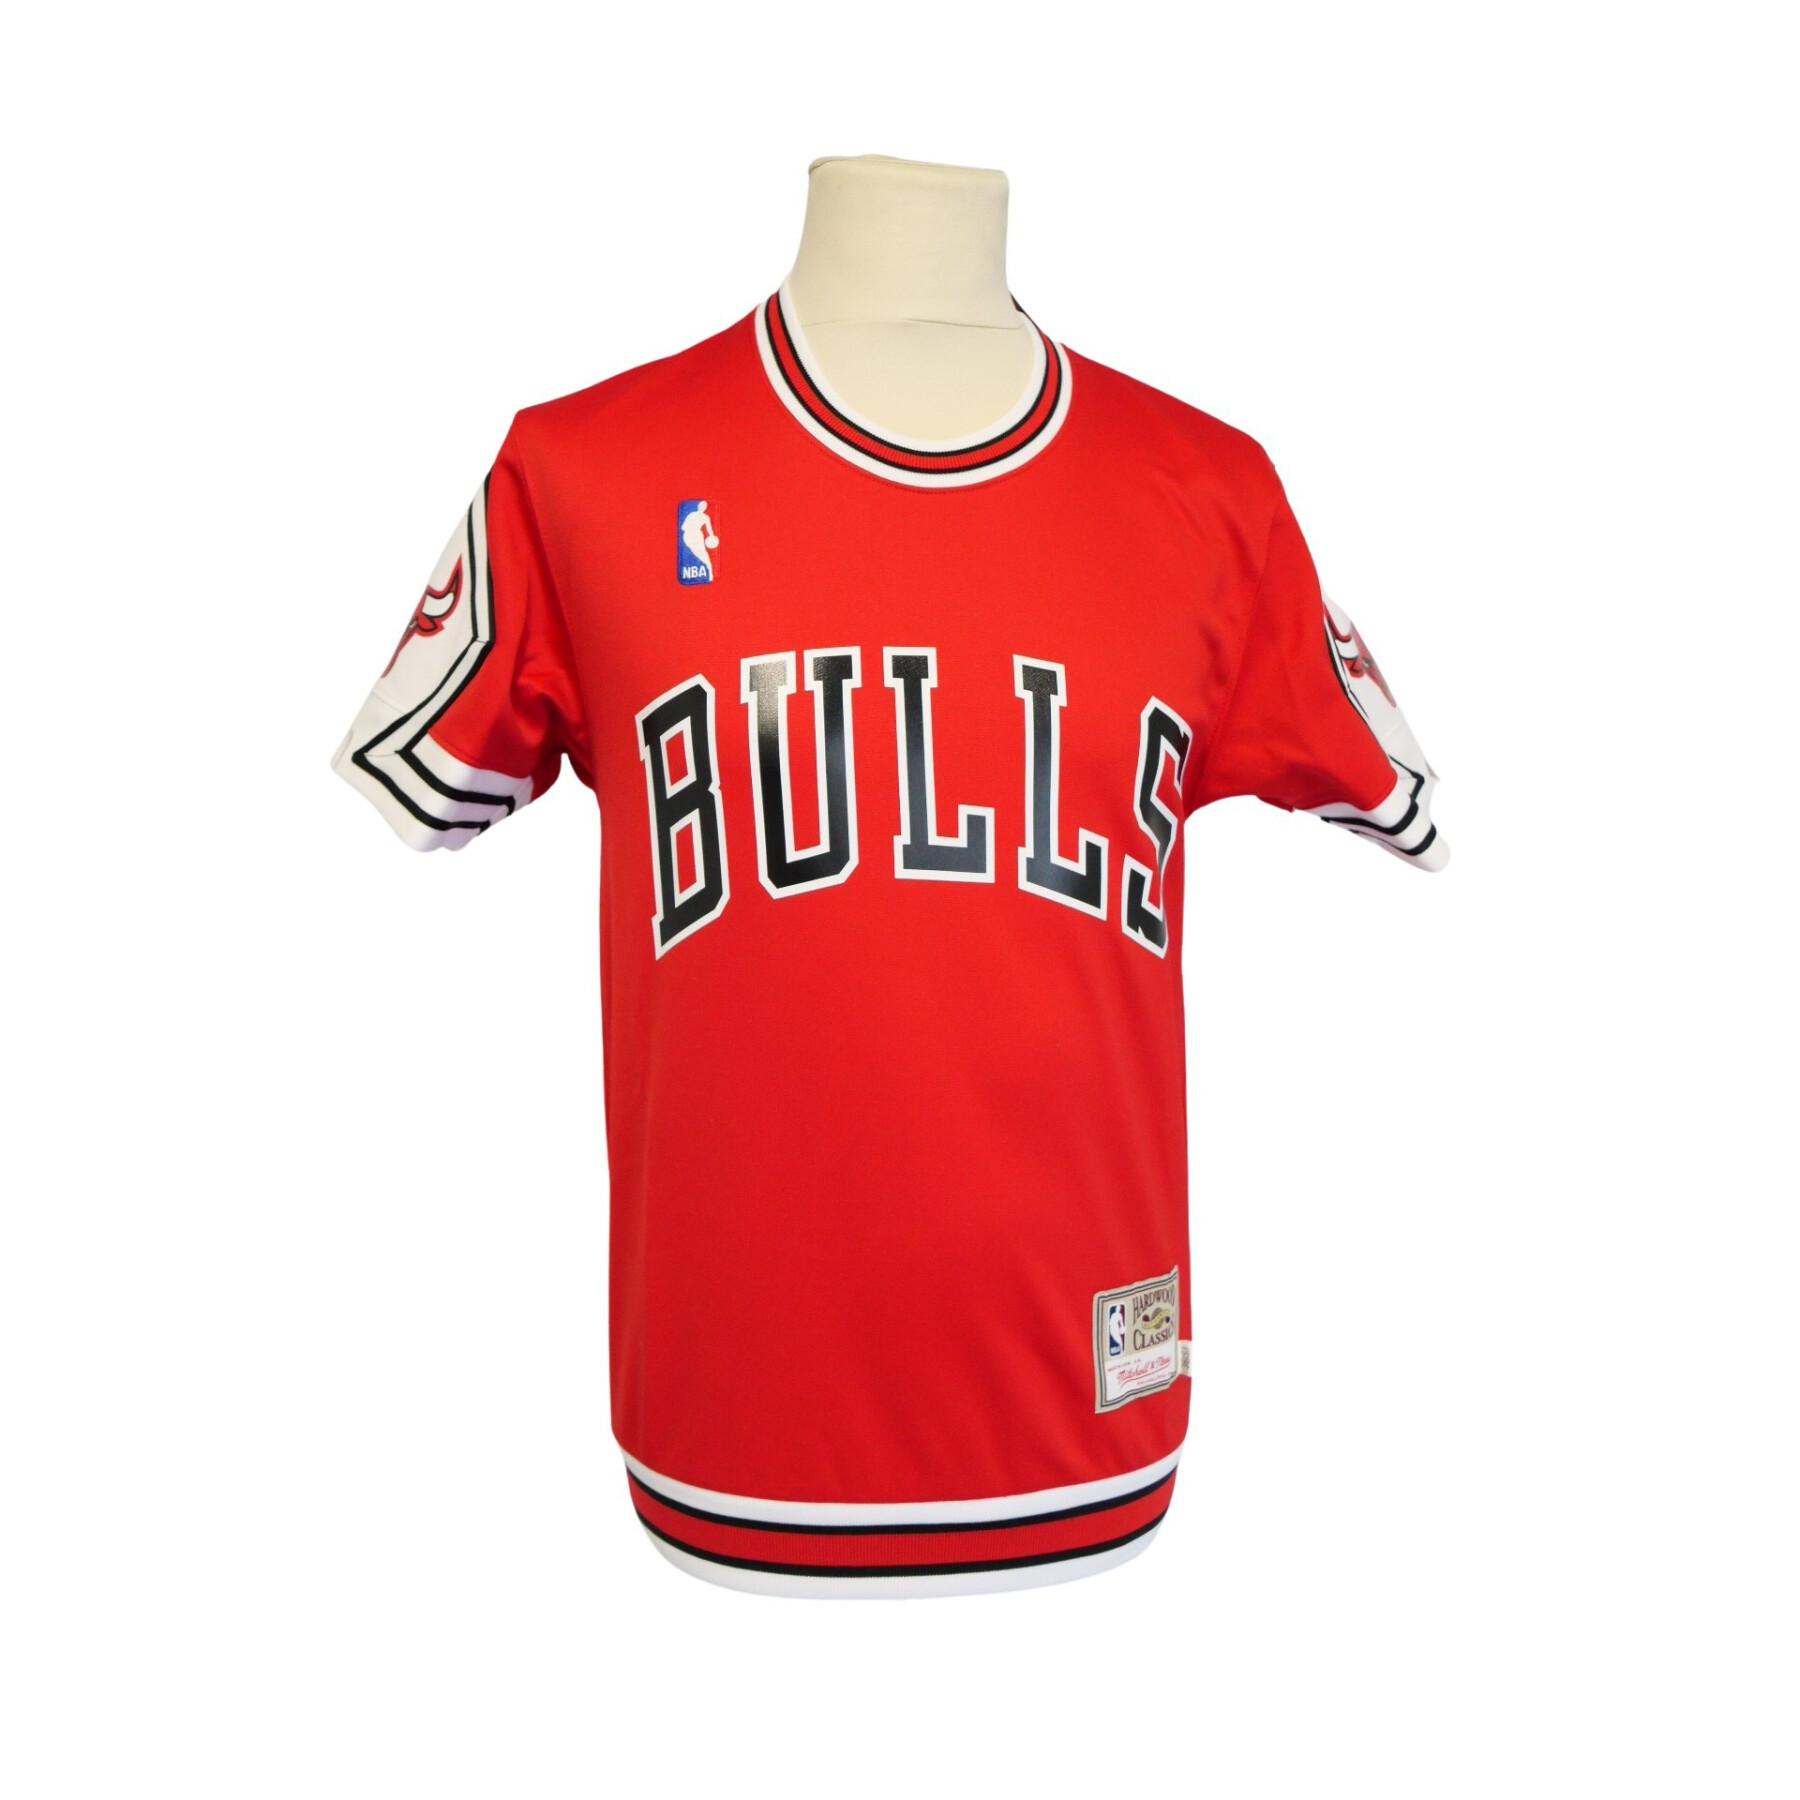 T-shirt Chicago Bulls authentic shooting